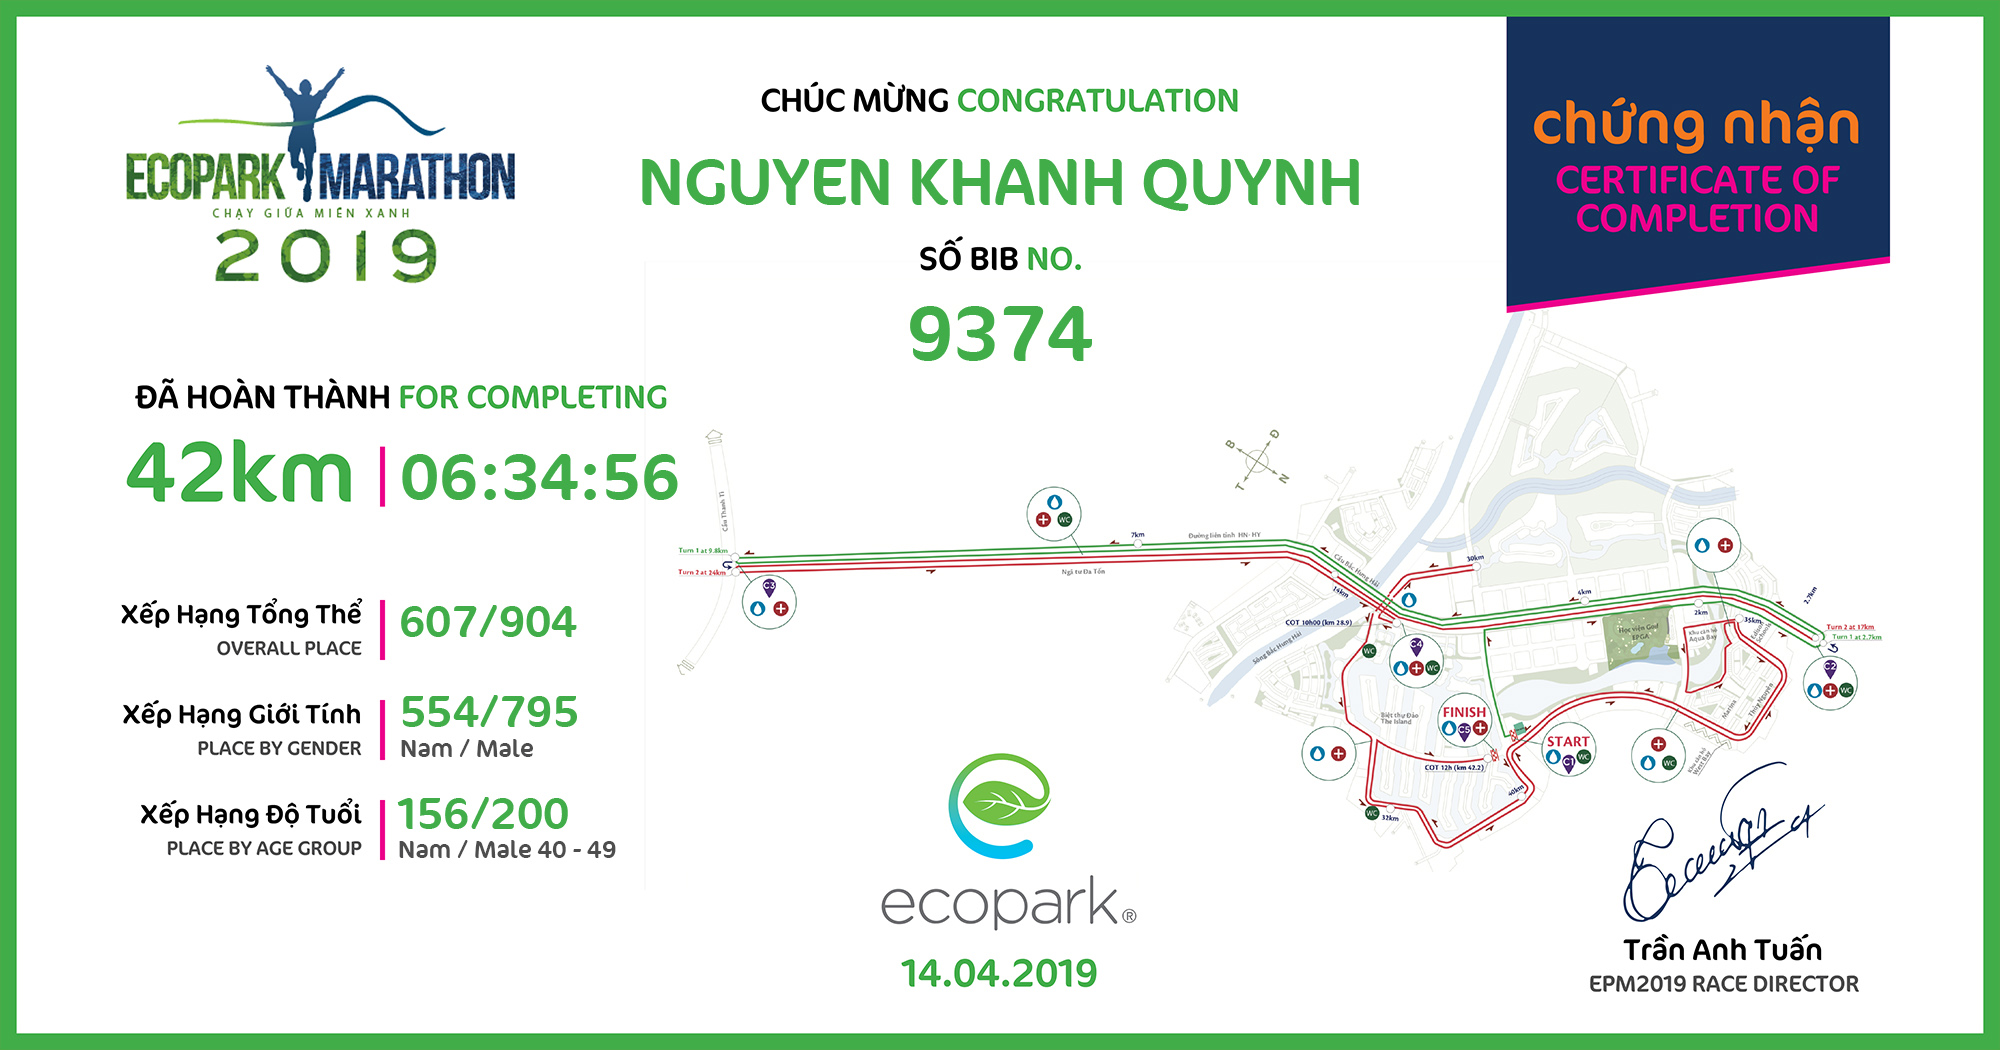 9374 - Nguyen Khanh Quynh